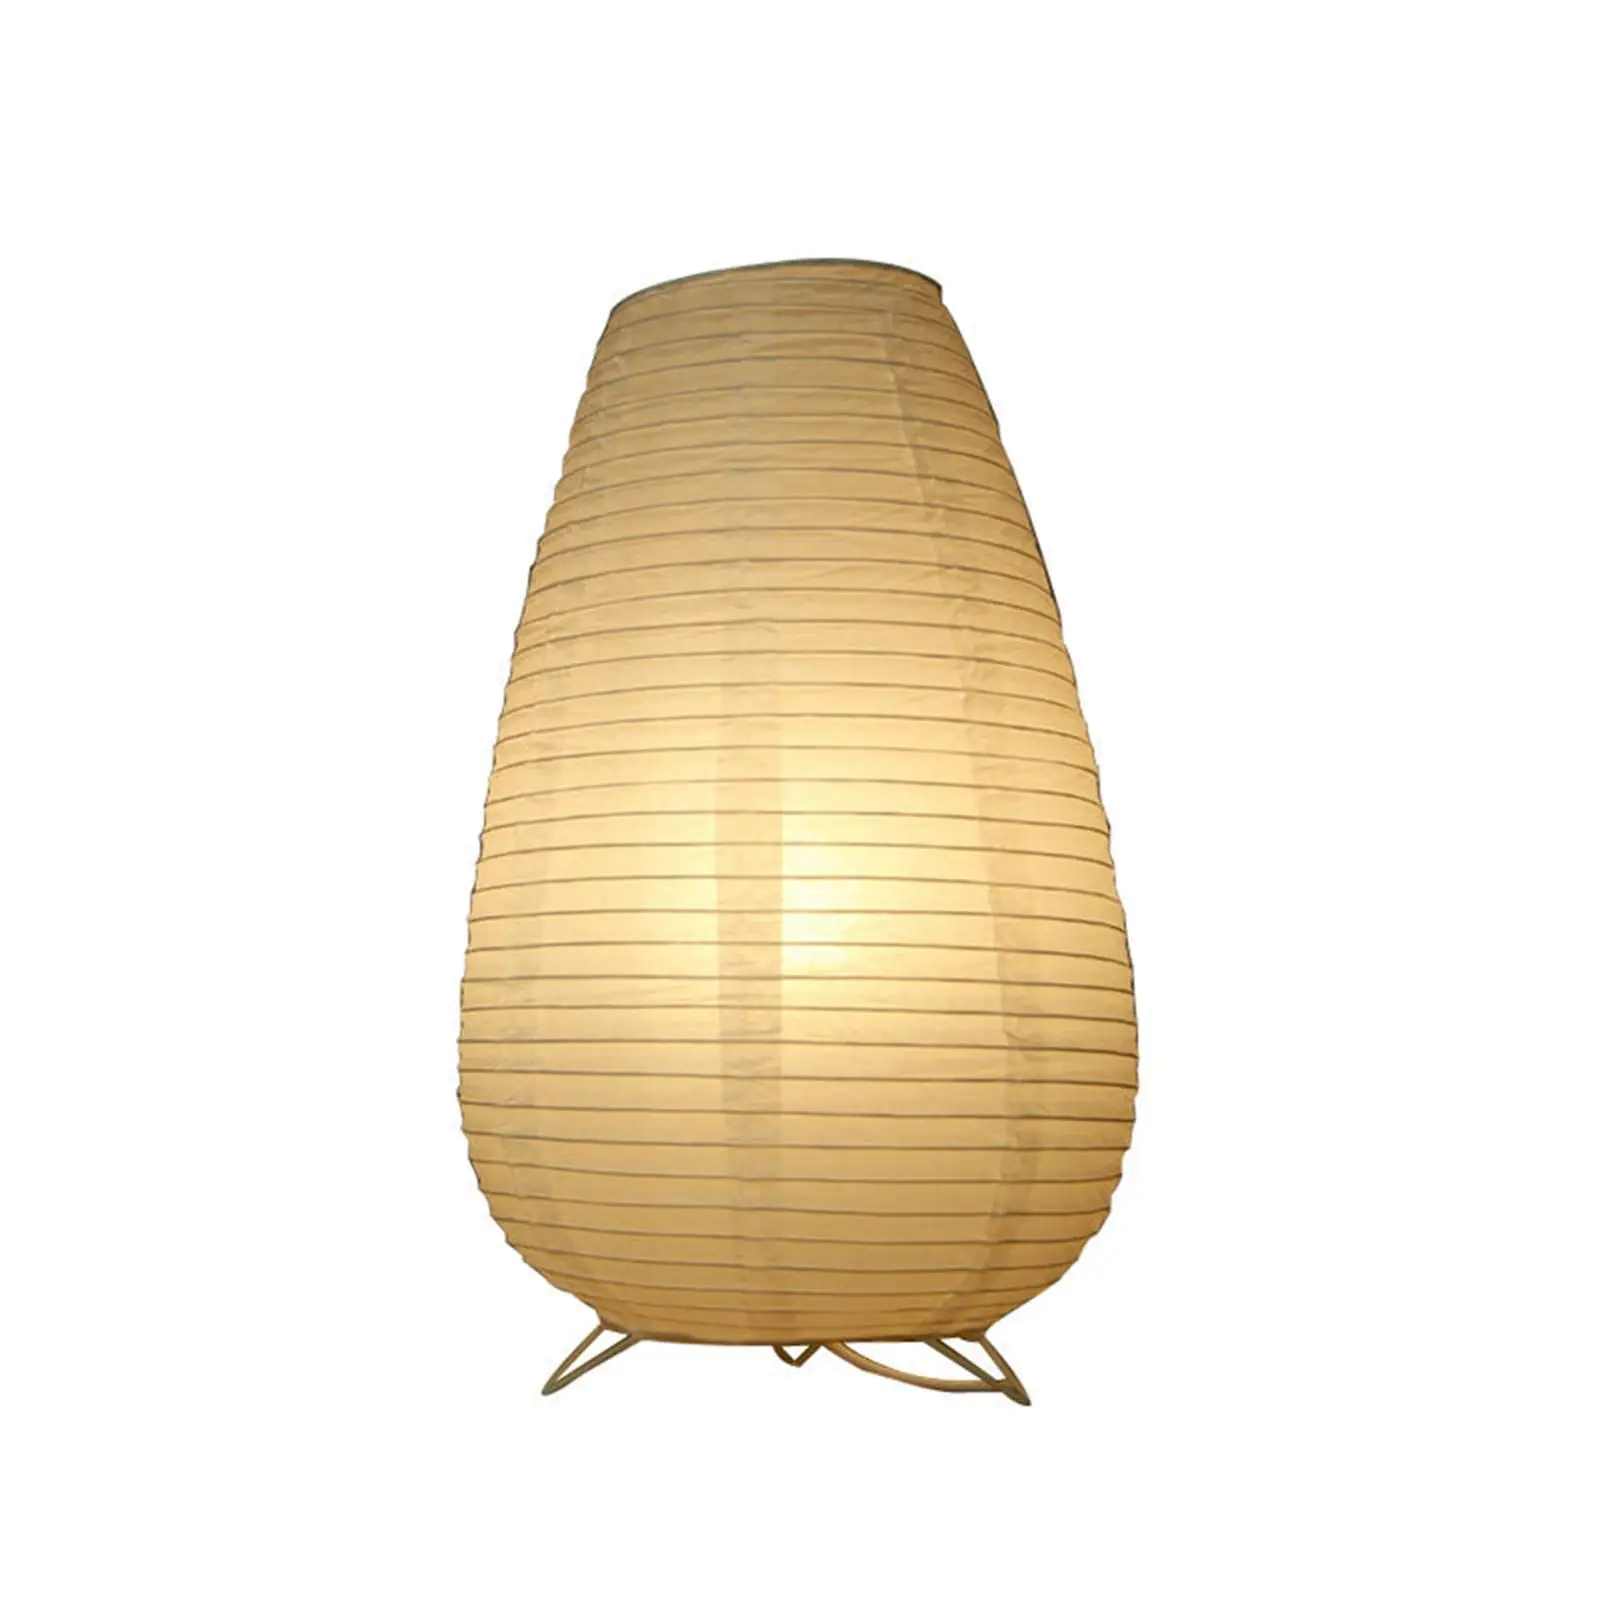 Paper Lantern Table Lamp Simple Lantern Lamp Desk Light for Bedside, Office, Home Decor